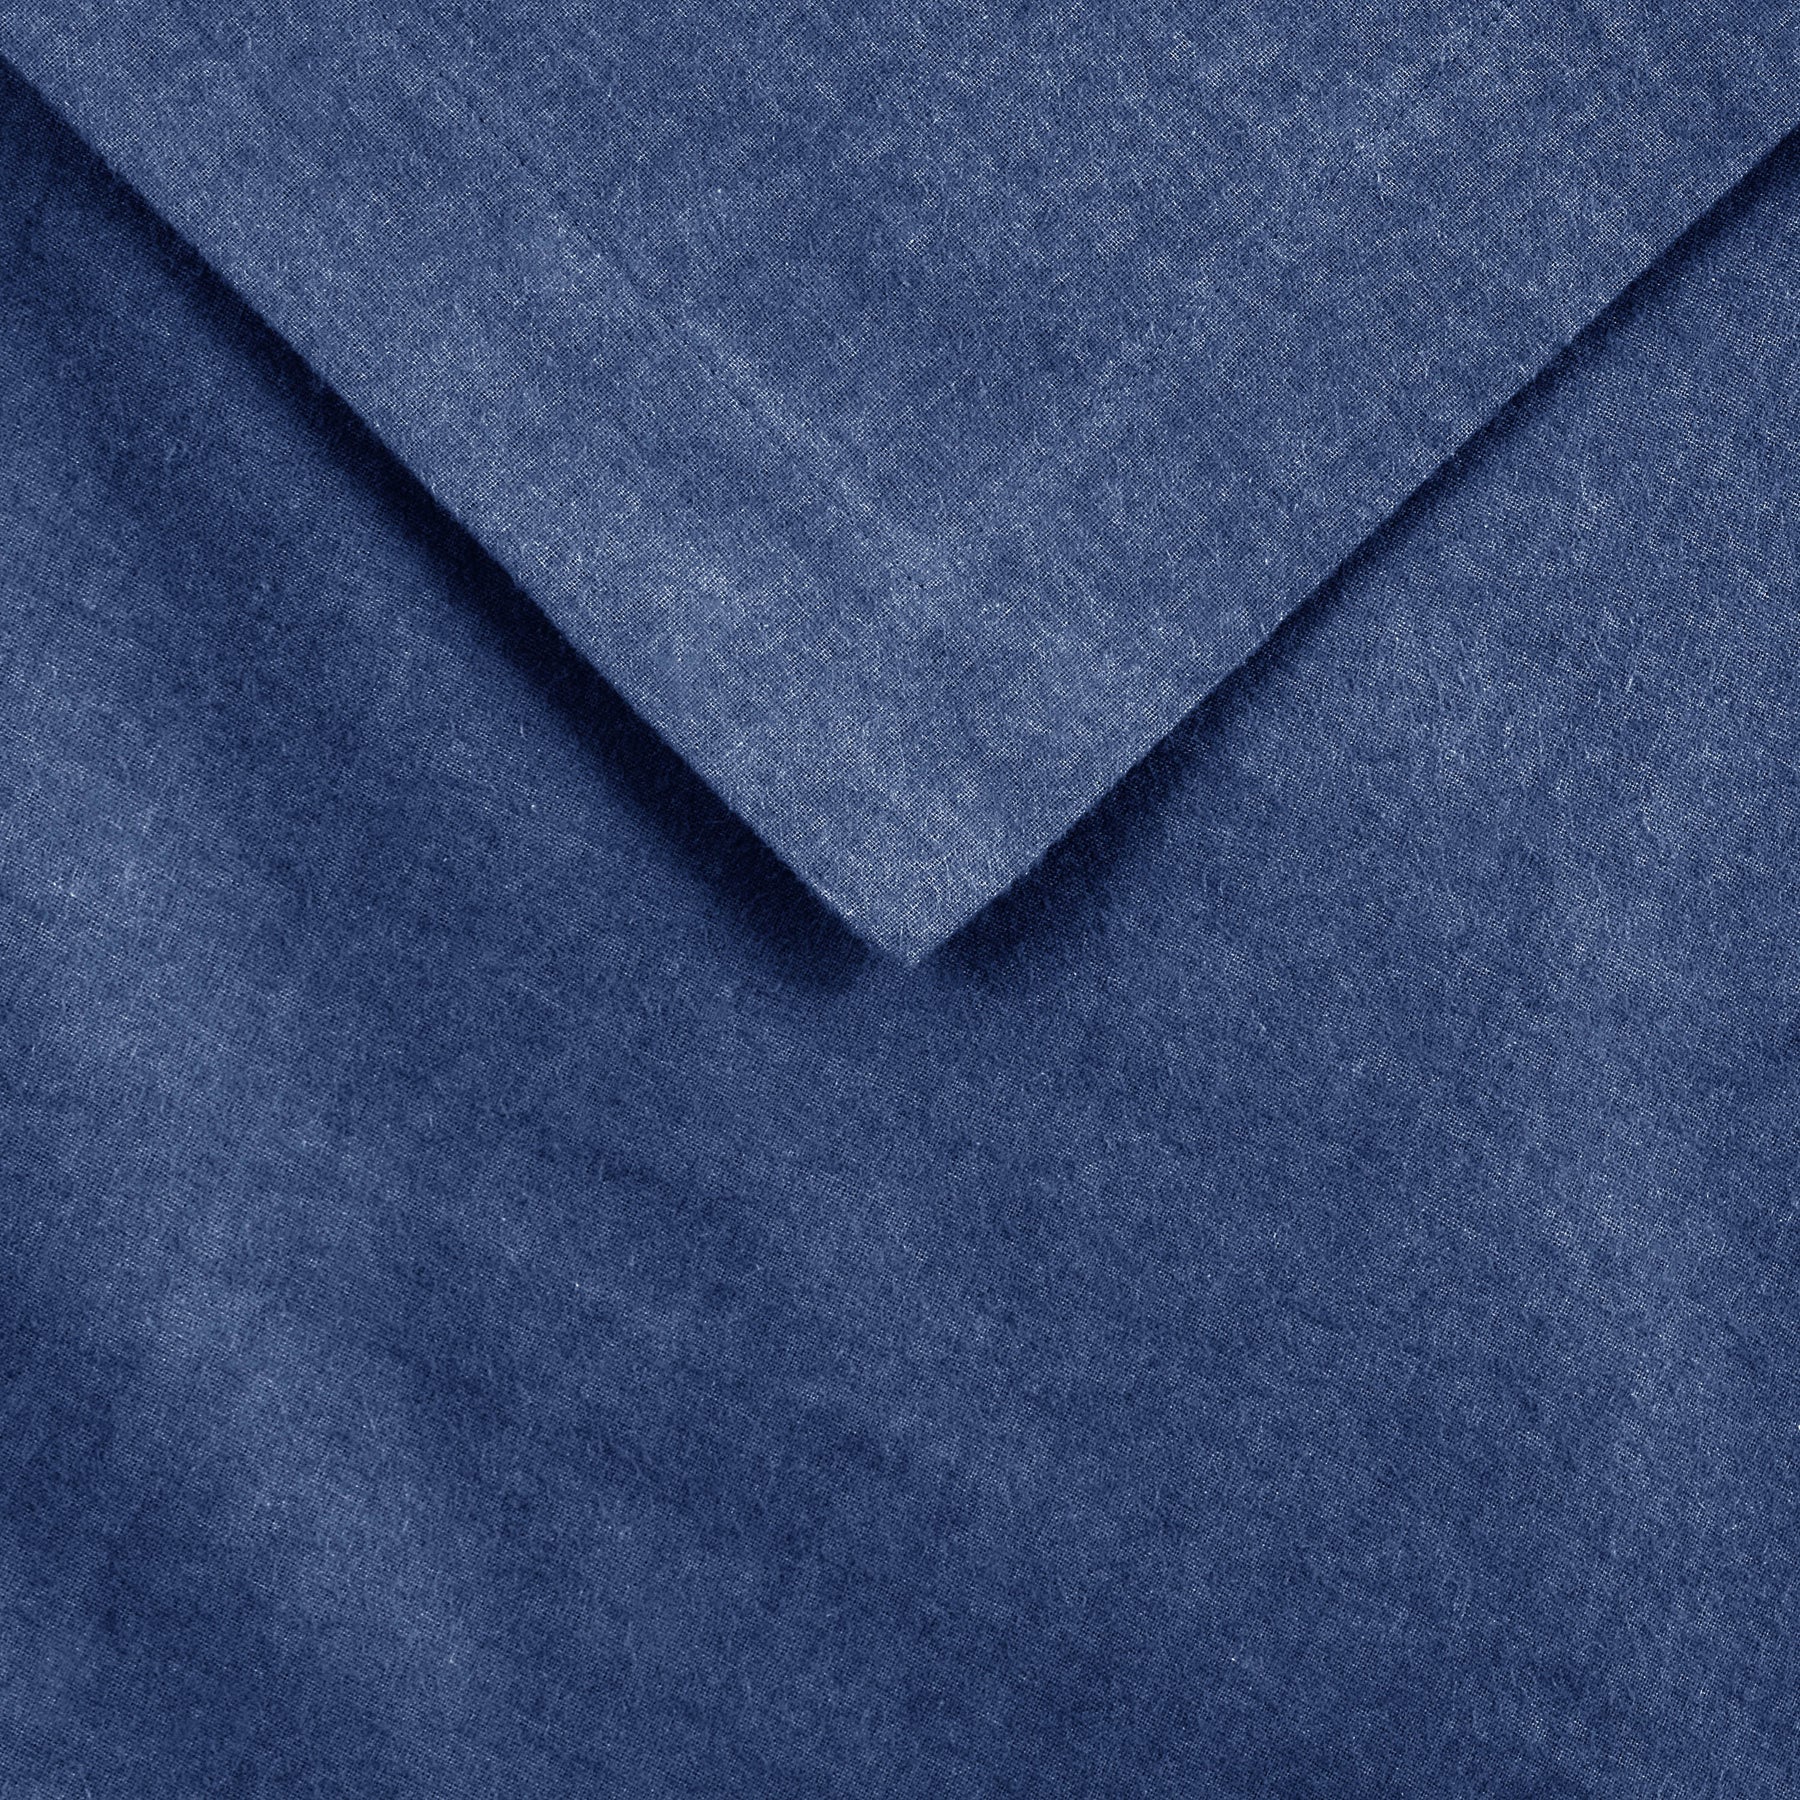 Superior Flannel Cotton Solid Modern Luxury Duvet Cover Set - Navy Blue